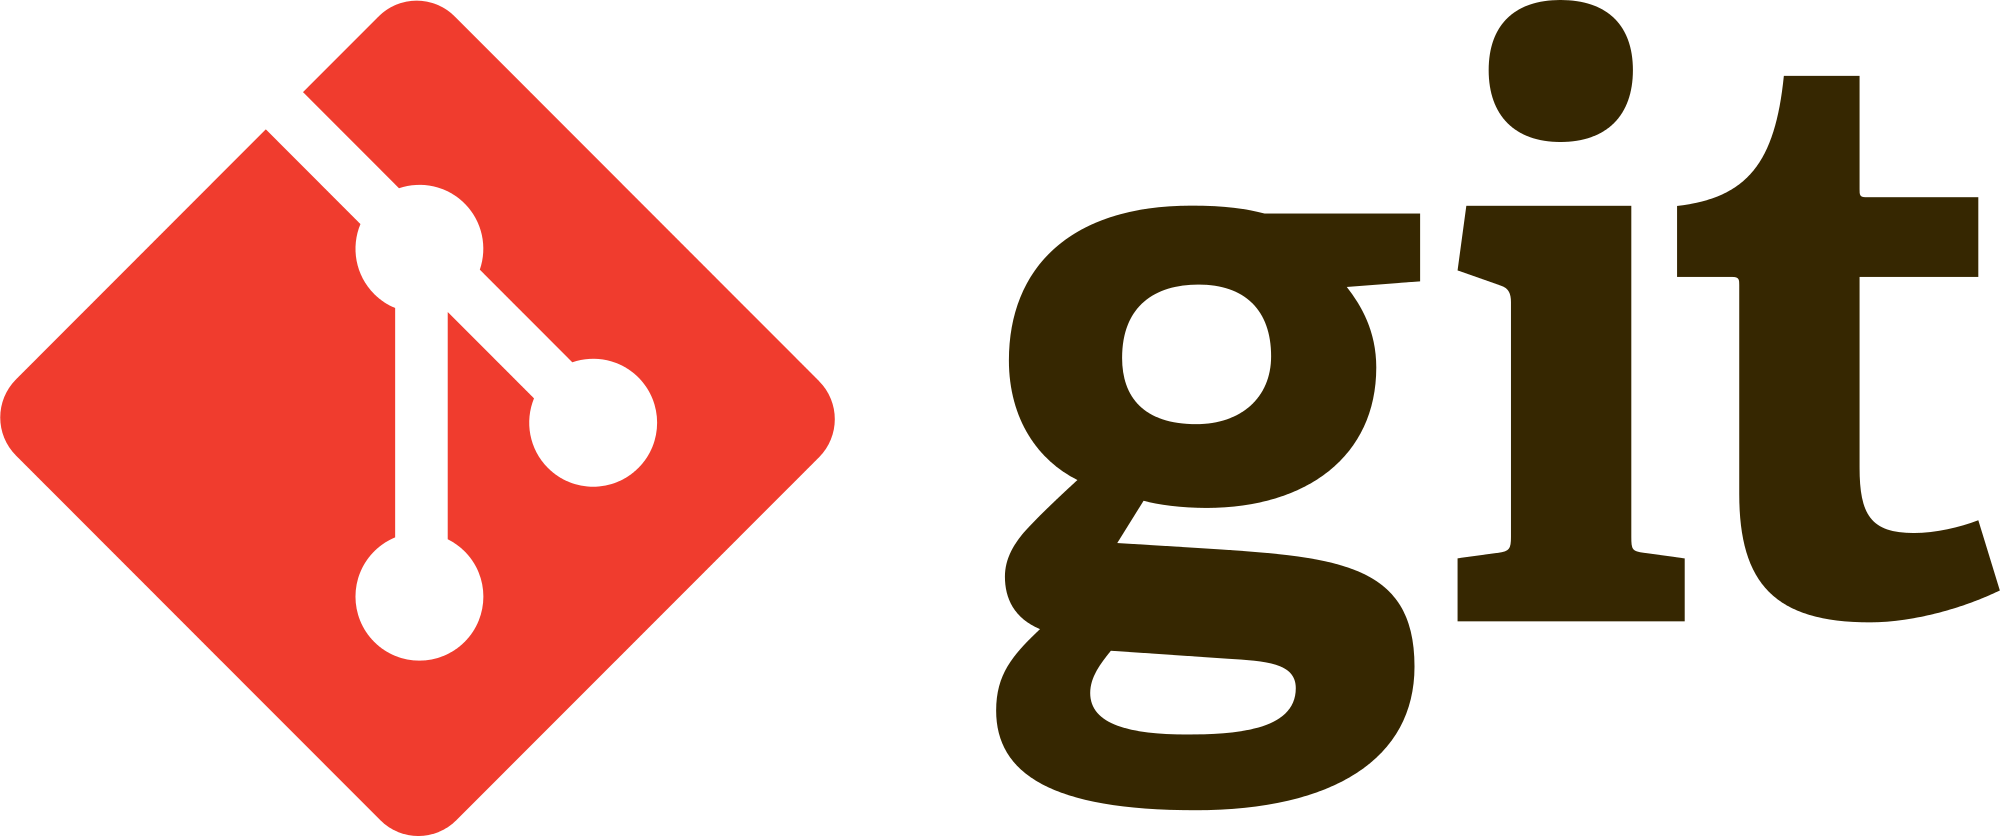 Reflections Of A Solo Developer - Git Logo Svg (2000x836)